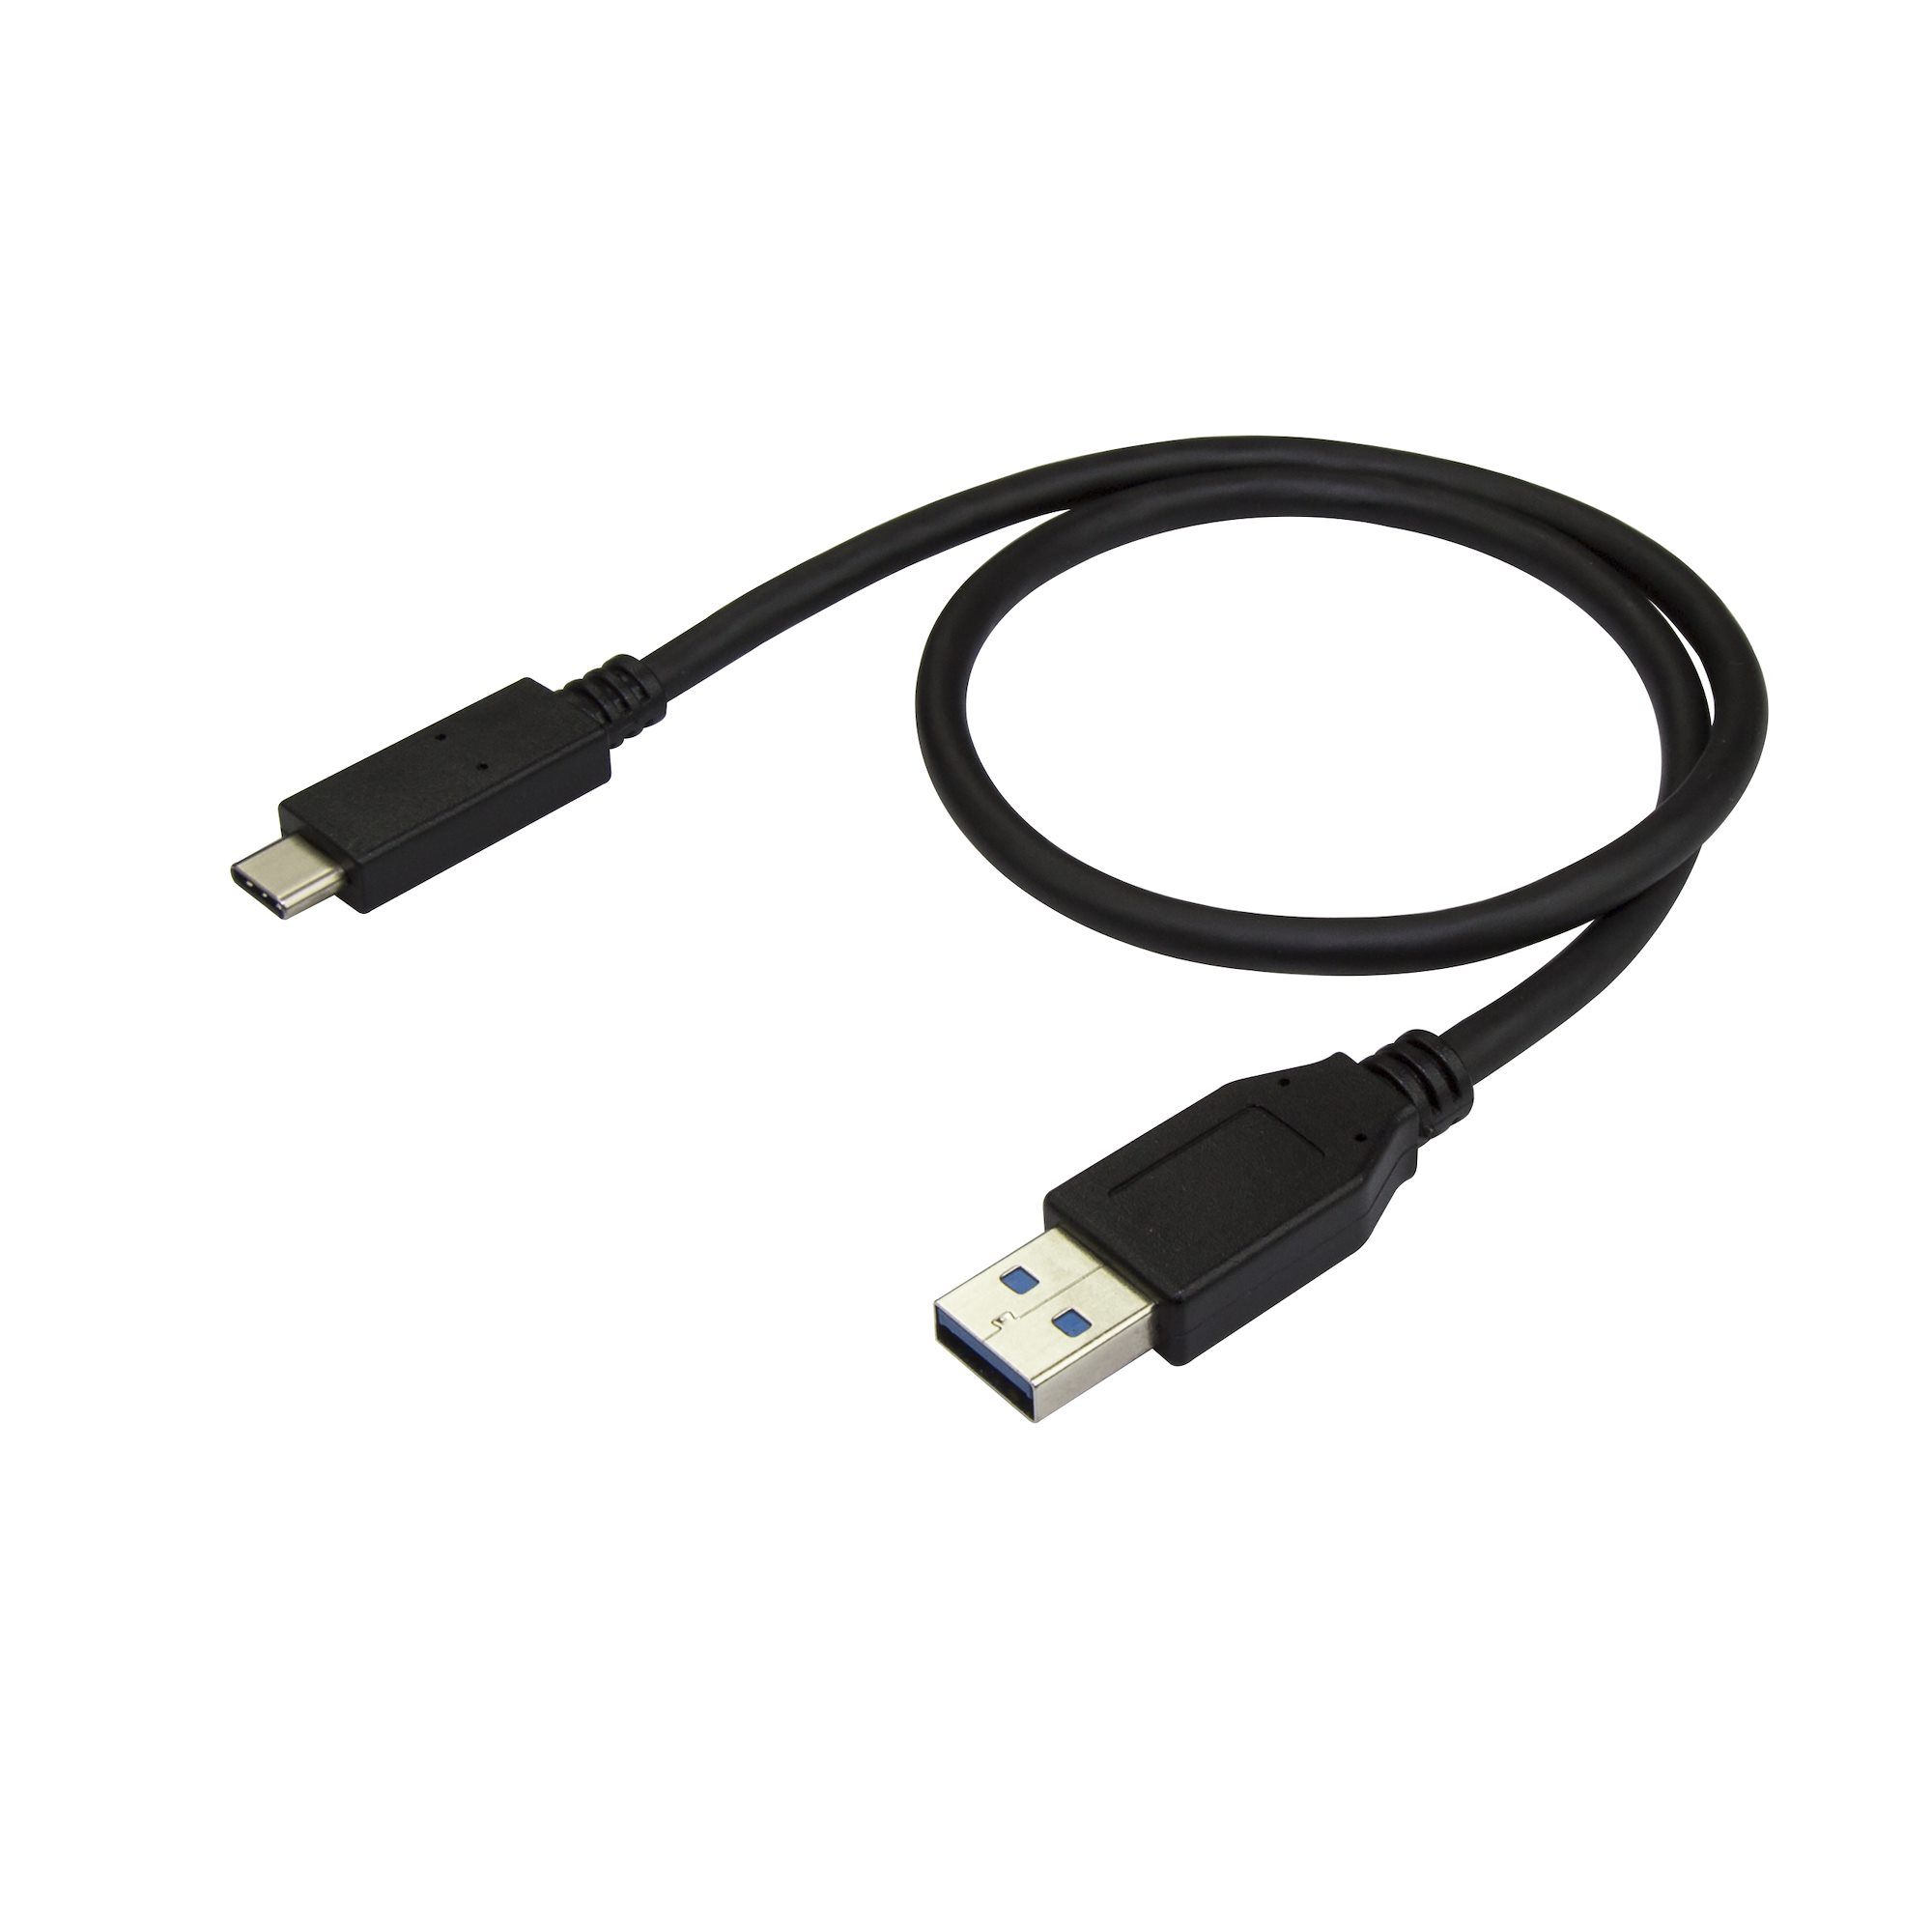 Buy Croma 10-in-1 USB 3.0 Type C to USB 3.0 Type C, USB 3.0 Type A